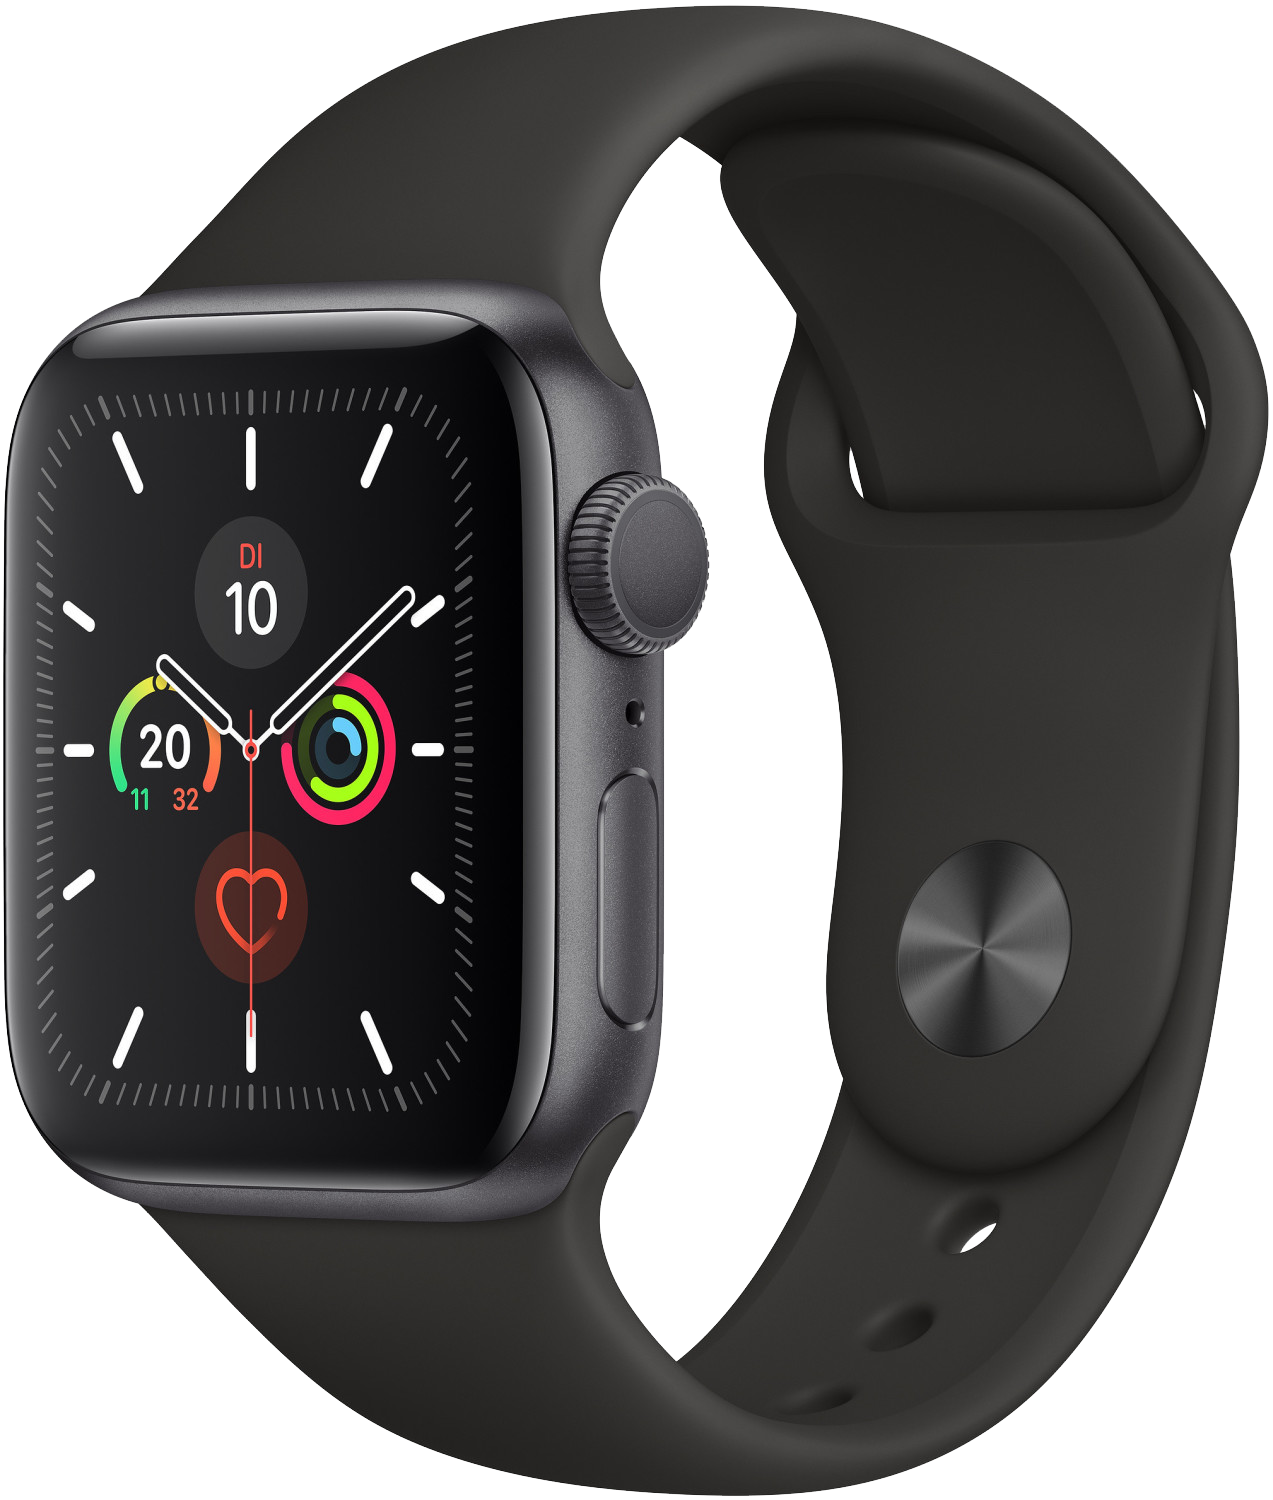 Apple Watch 5 LTE grau Alu 44mm armband schwarz MWWE2 - Ohne Vertrag